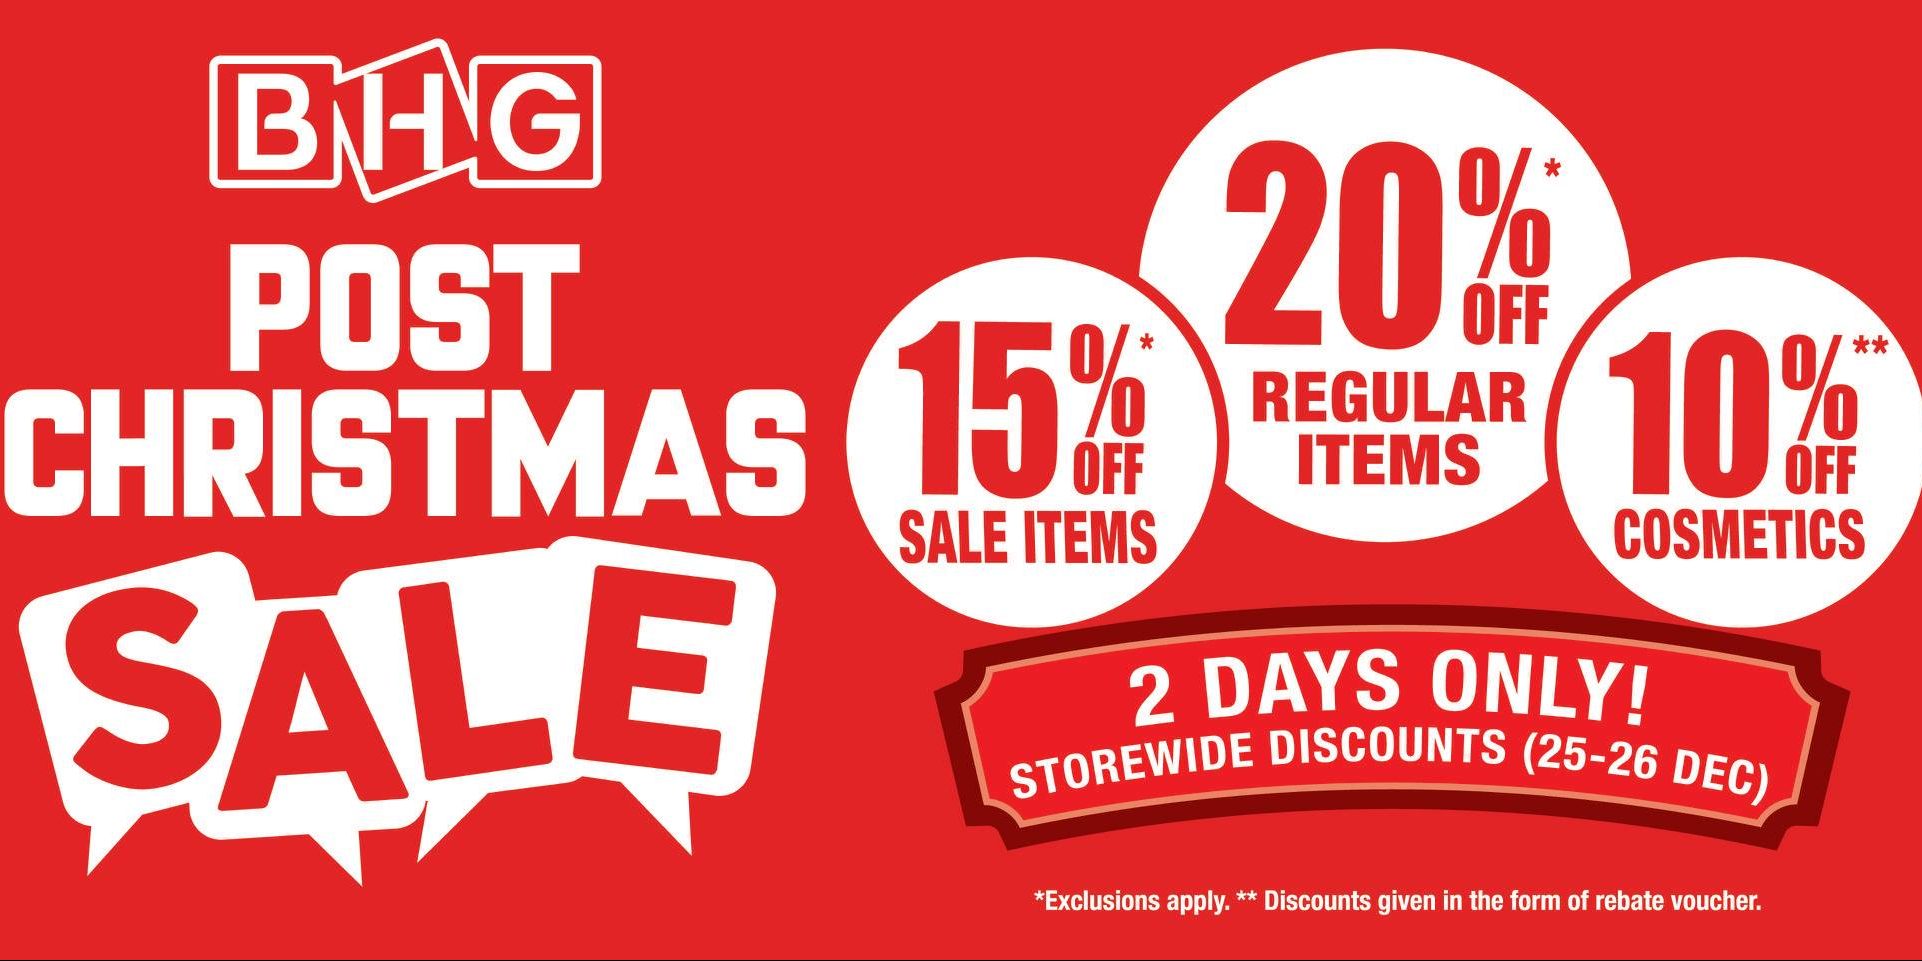 BHG Singapore Post Christmas Sale Up to 20% Off Promotion 25-26 Dec 2016